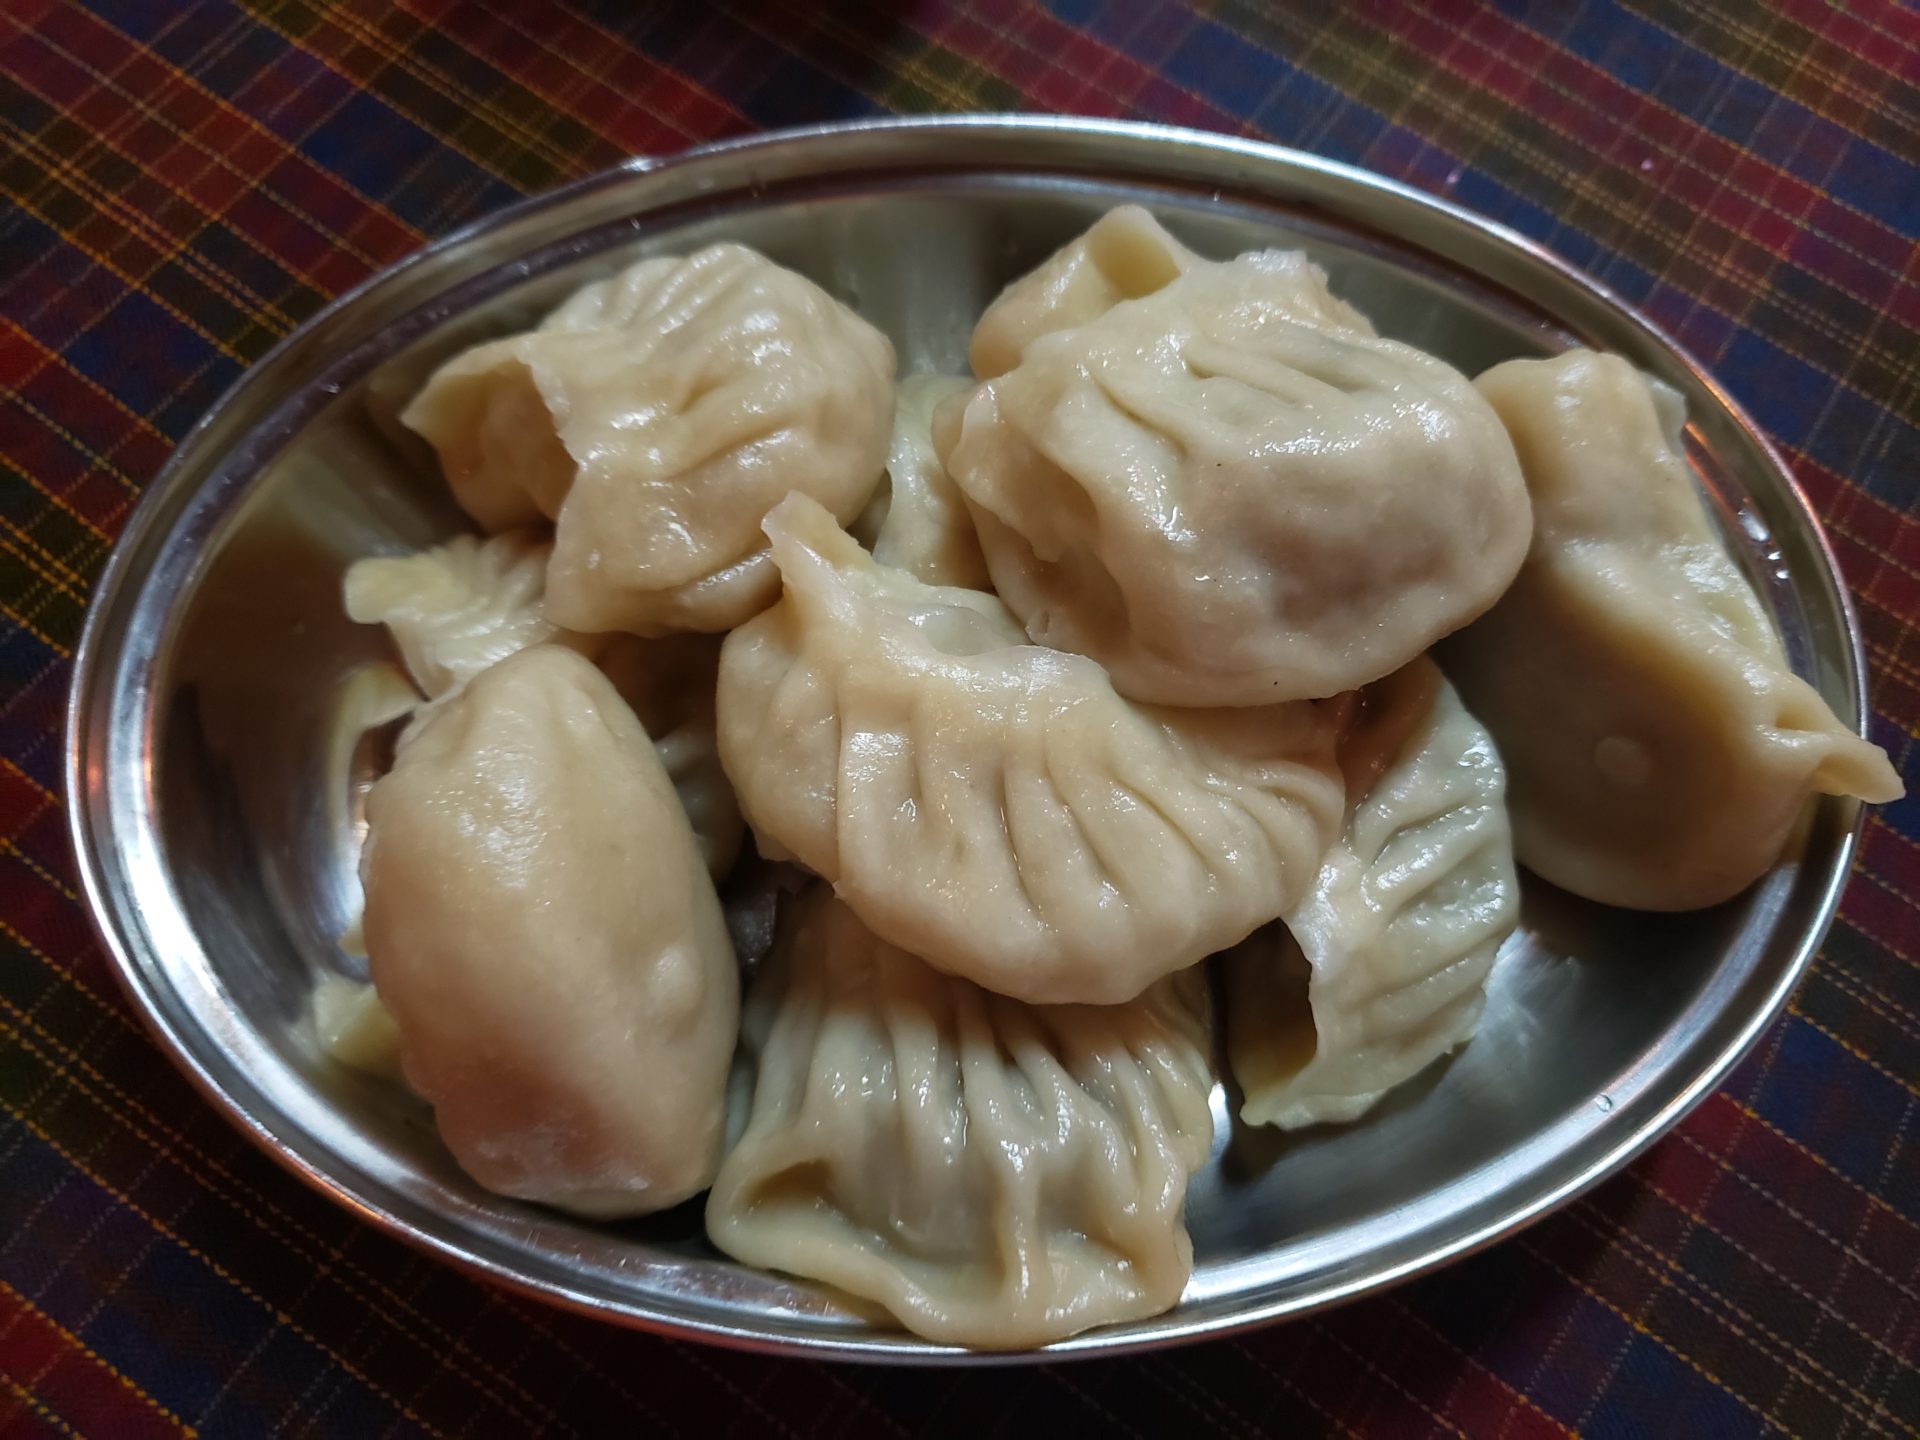 a plate of dumplings on a table